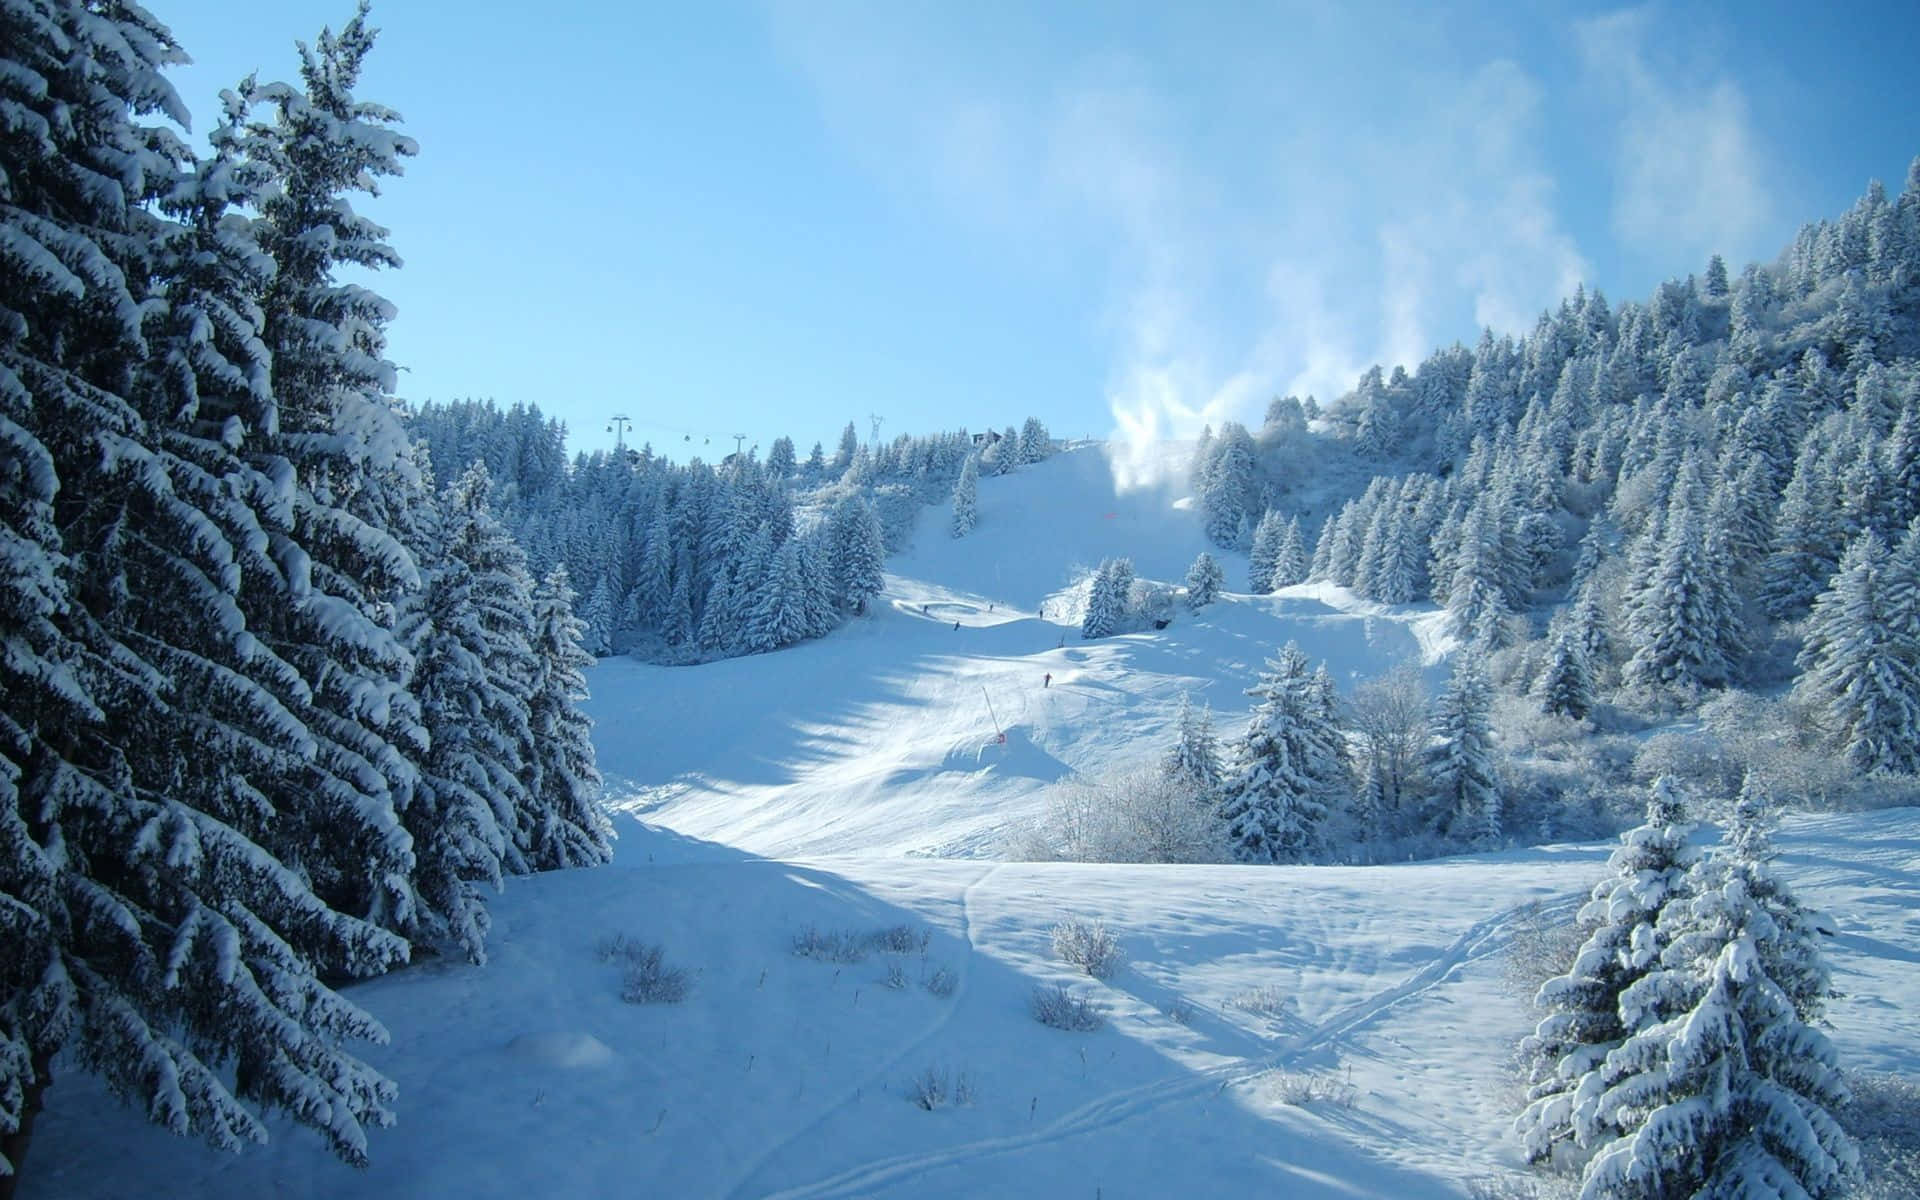 Enjoy the View of Snowy Winter Wonderland